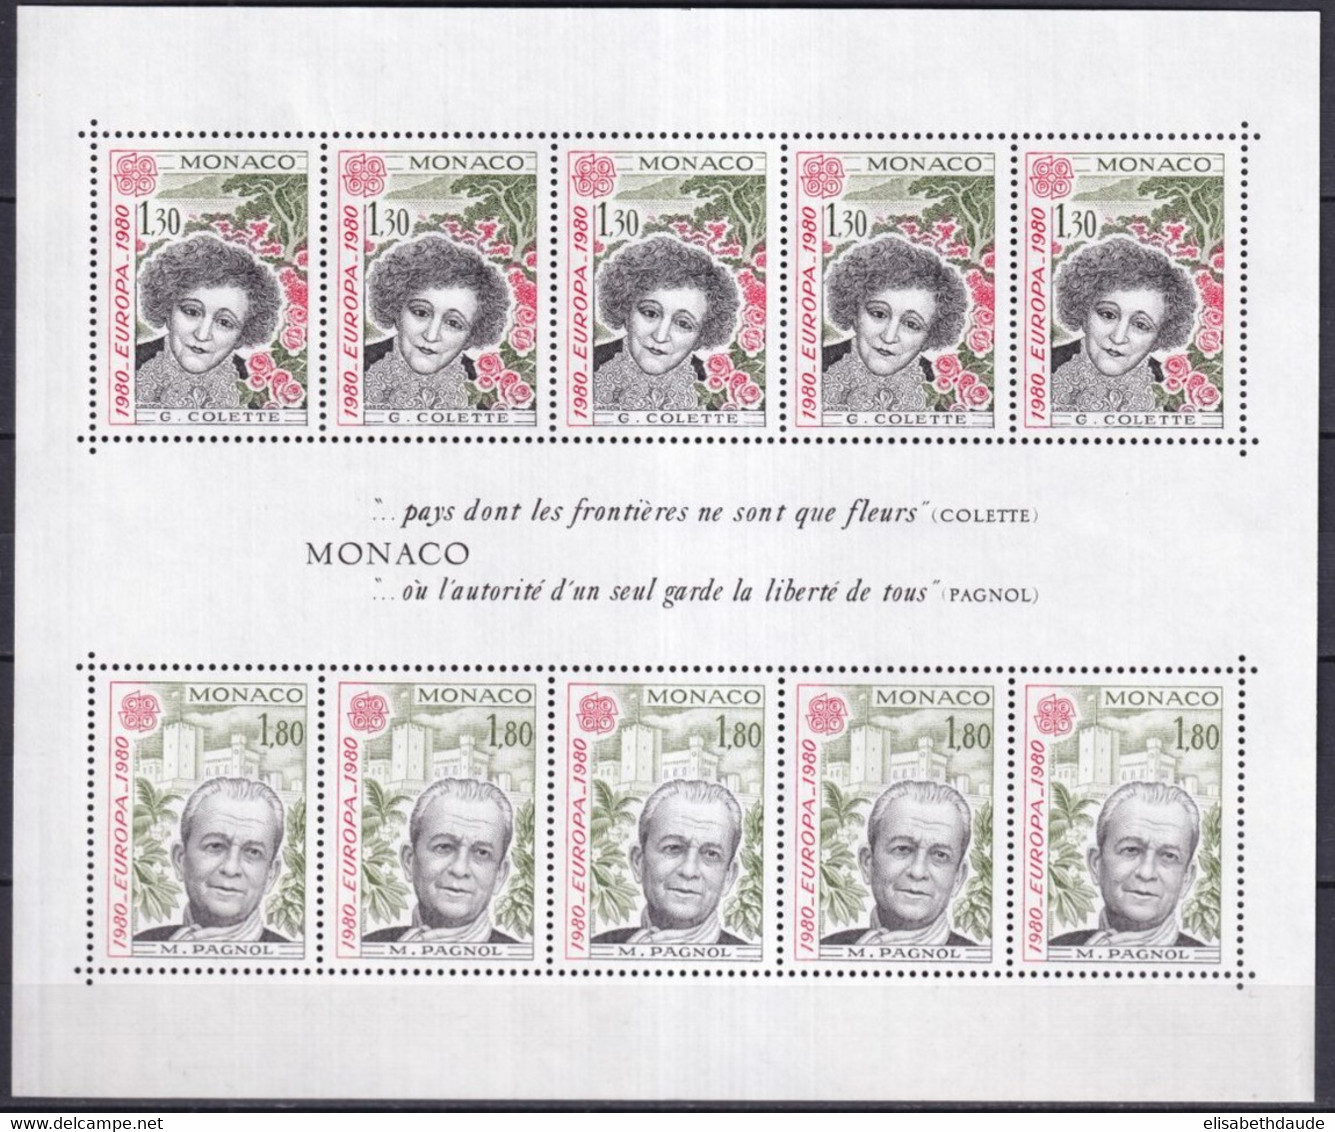 PROMOTION MONACO - 1980 - ANNEE COMPLETE Avec BLOC EUROPA ! ** MNH - COTE = 139 EUR. - Volledige Jaargang